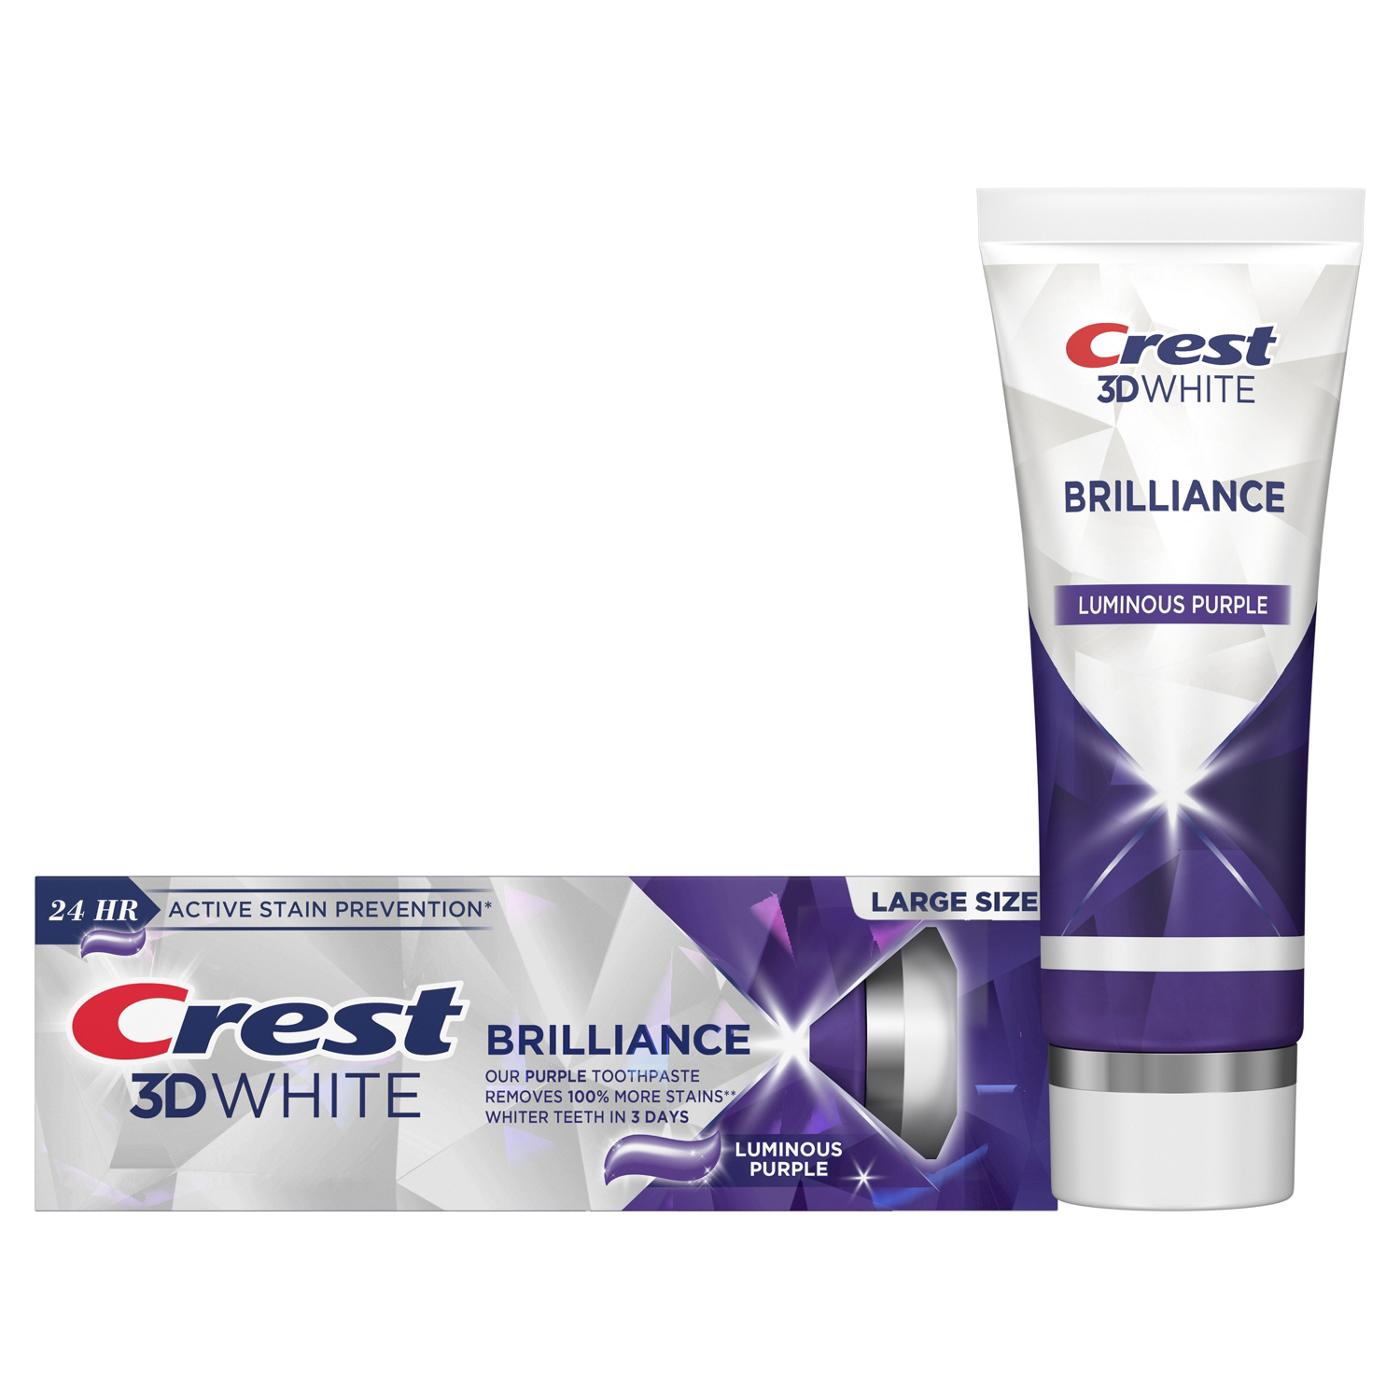 Crest 3D White Brilliance Toothpaste - Luminous Purple; image 7 of 8